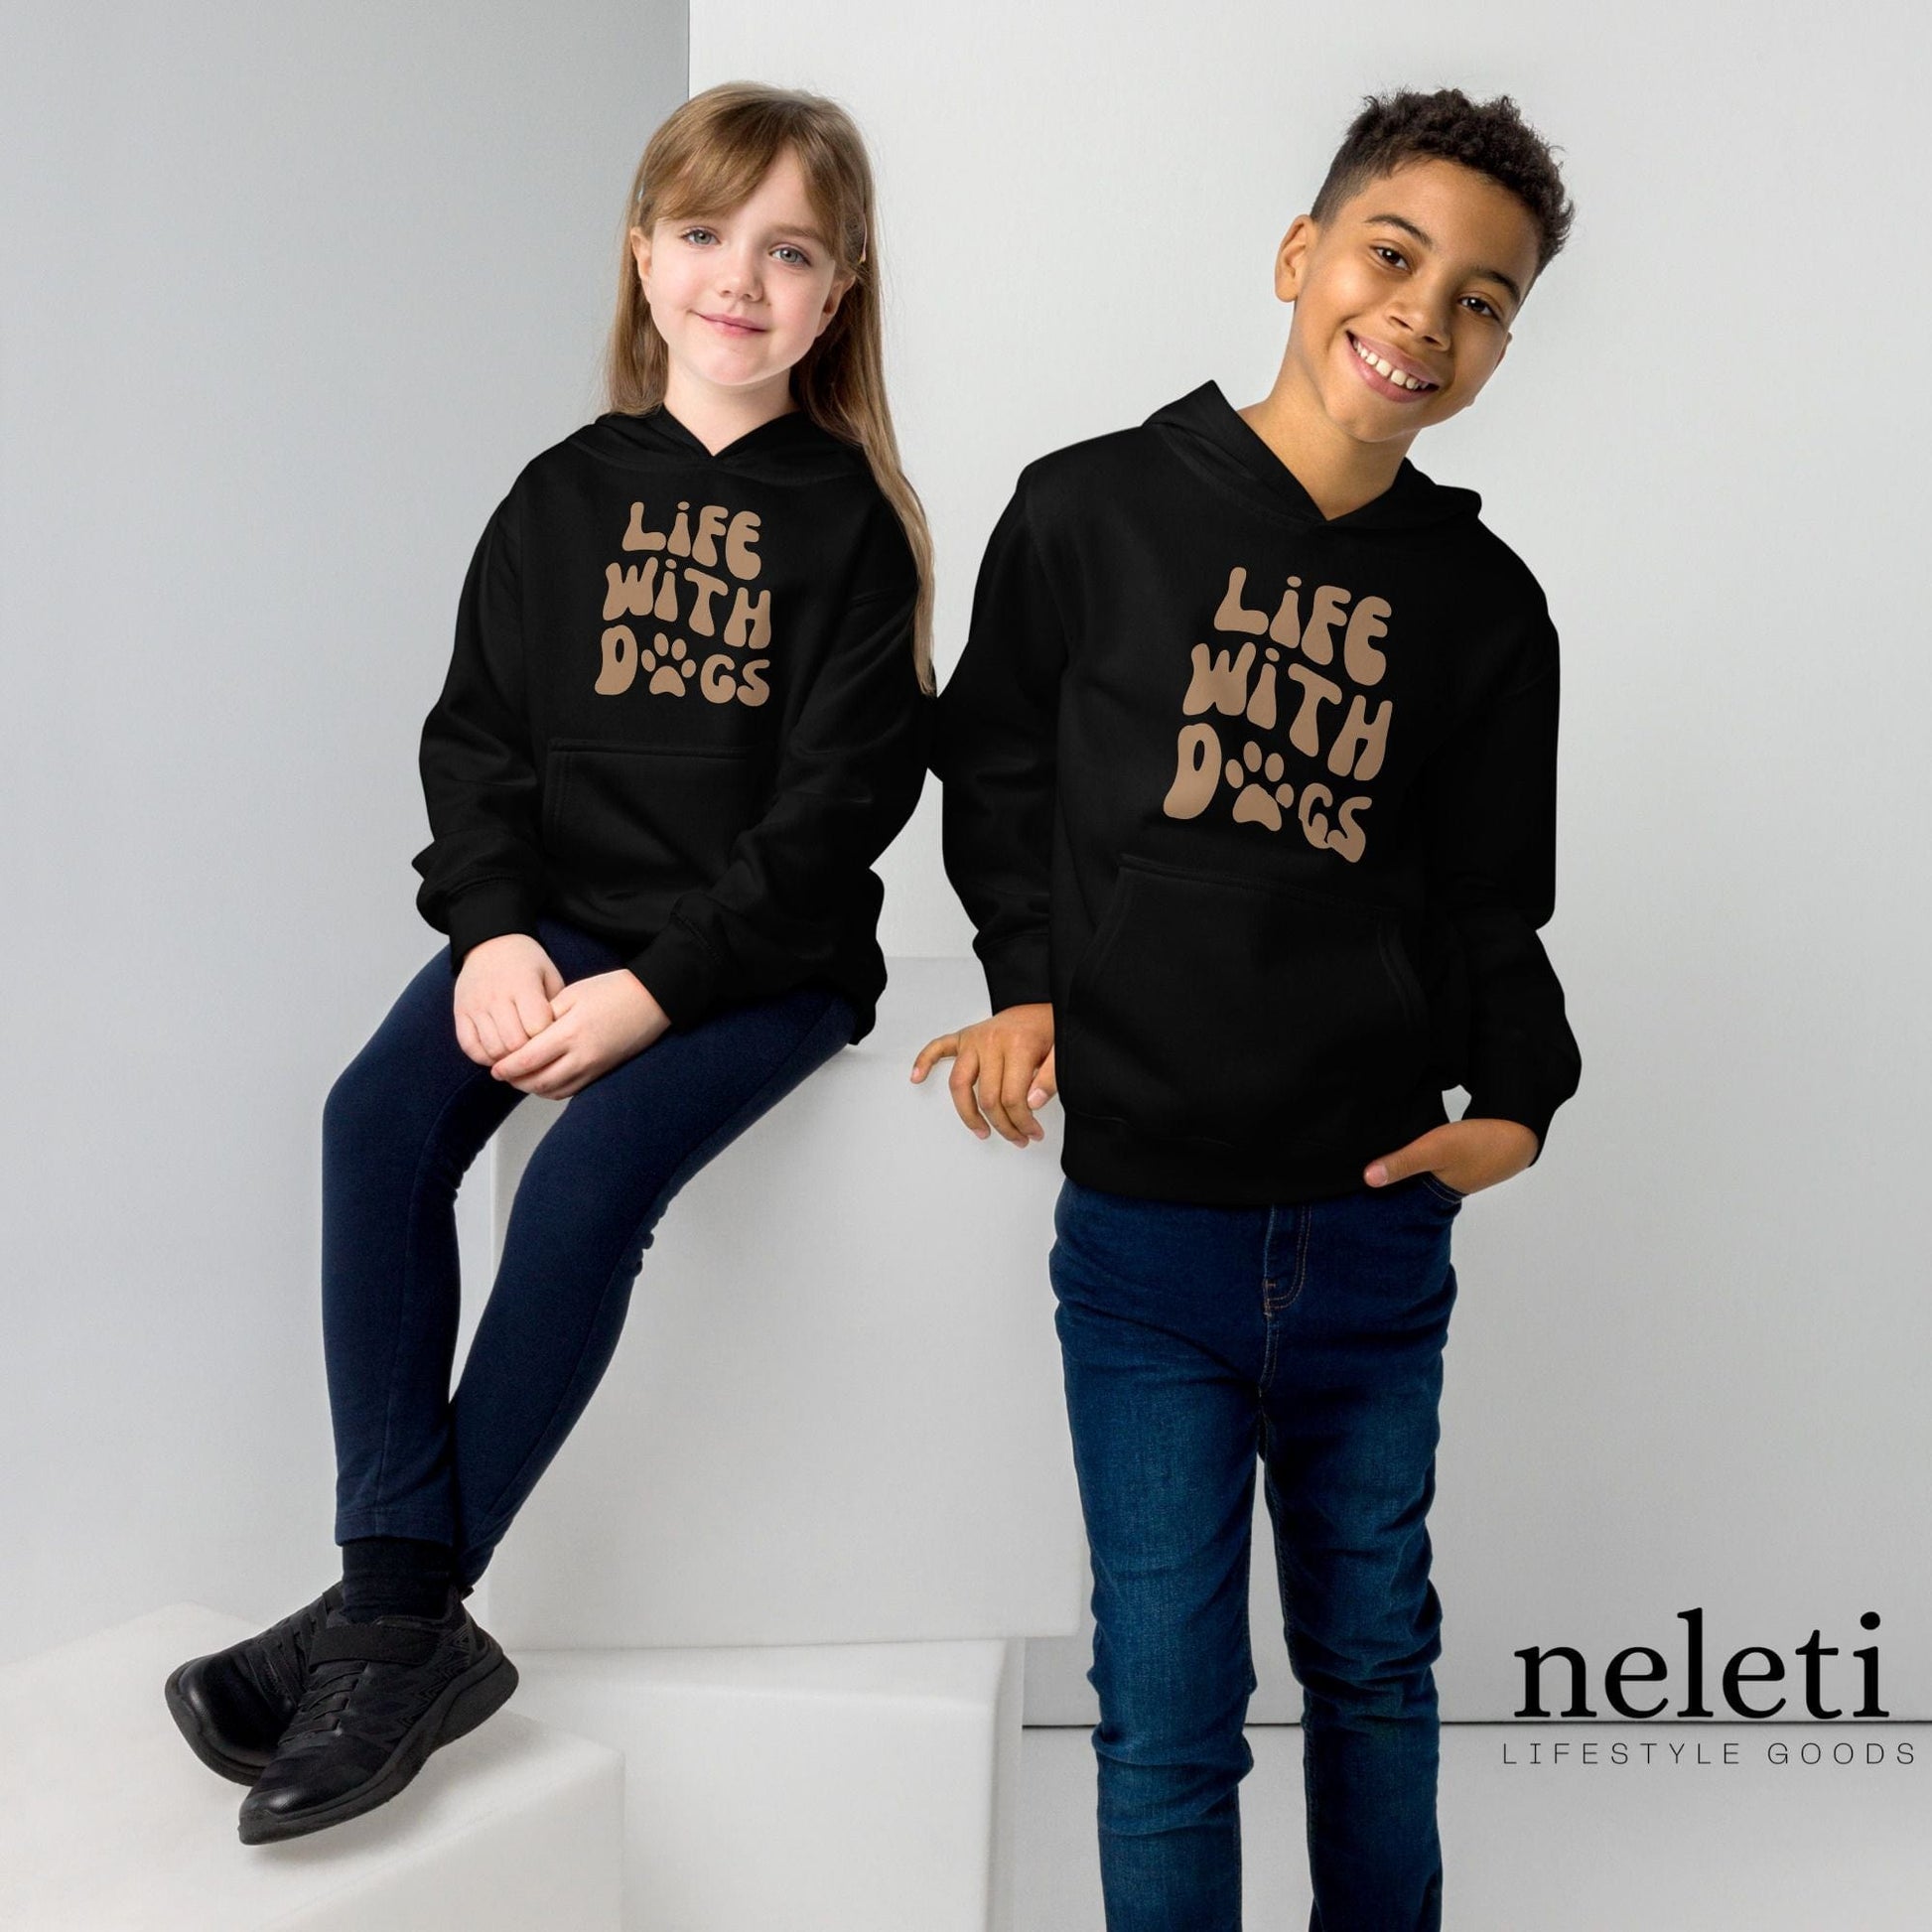 neleti.com-black-kids-hoodies-with-paw-print